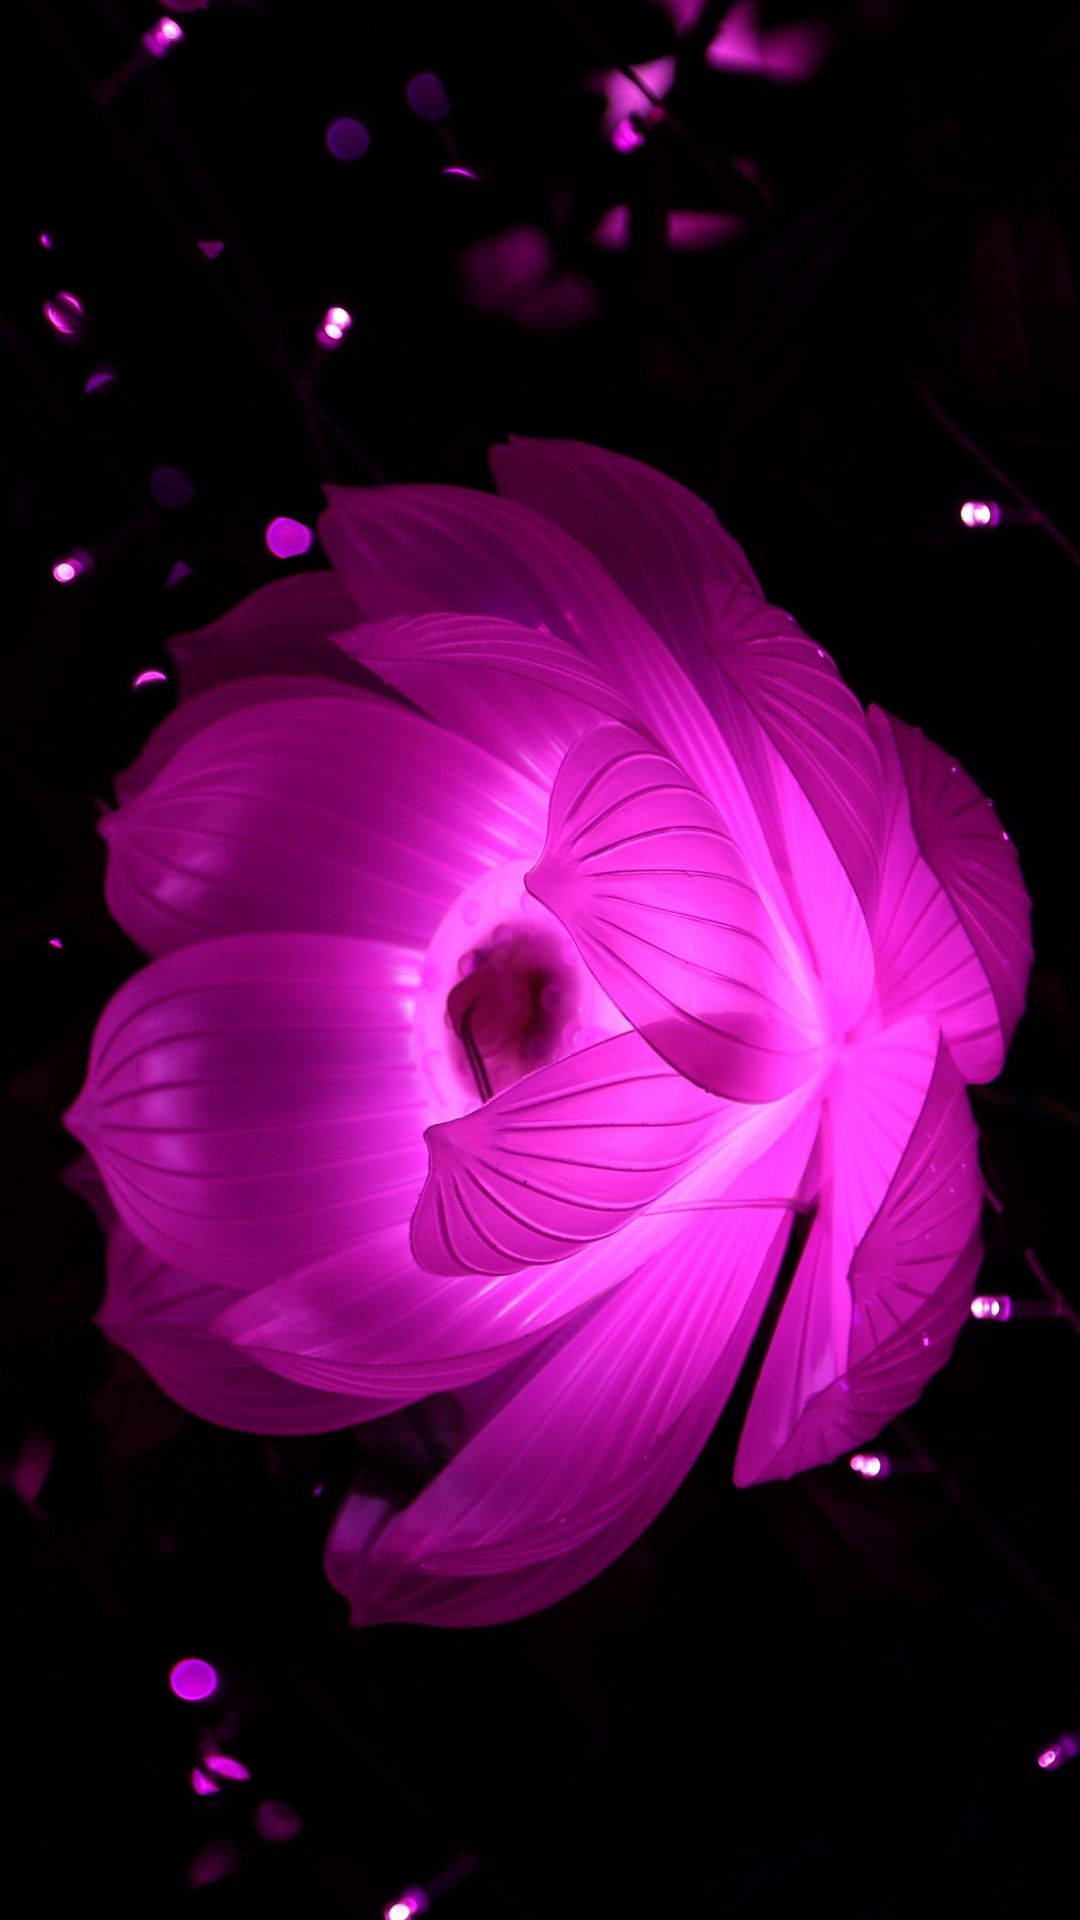 Glowing Purple Flower in Stunning Darkness Wallpaper